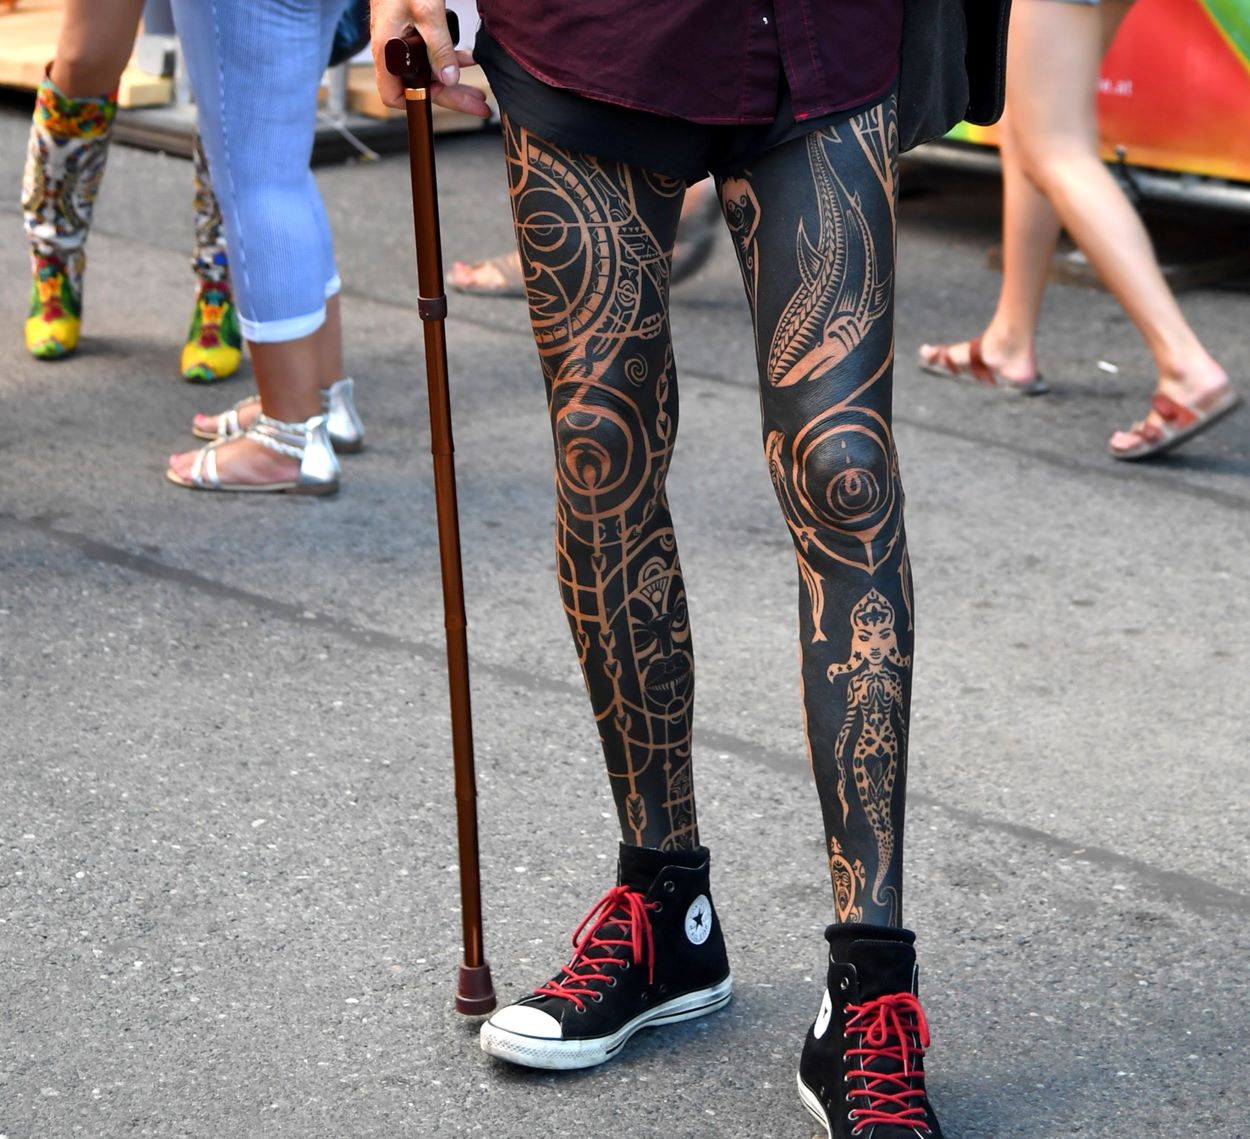 Tattoos or Tā moko in Maori culture were considered sacred